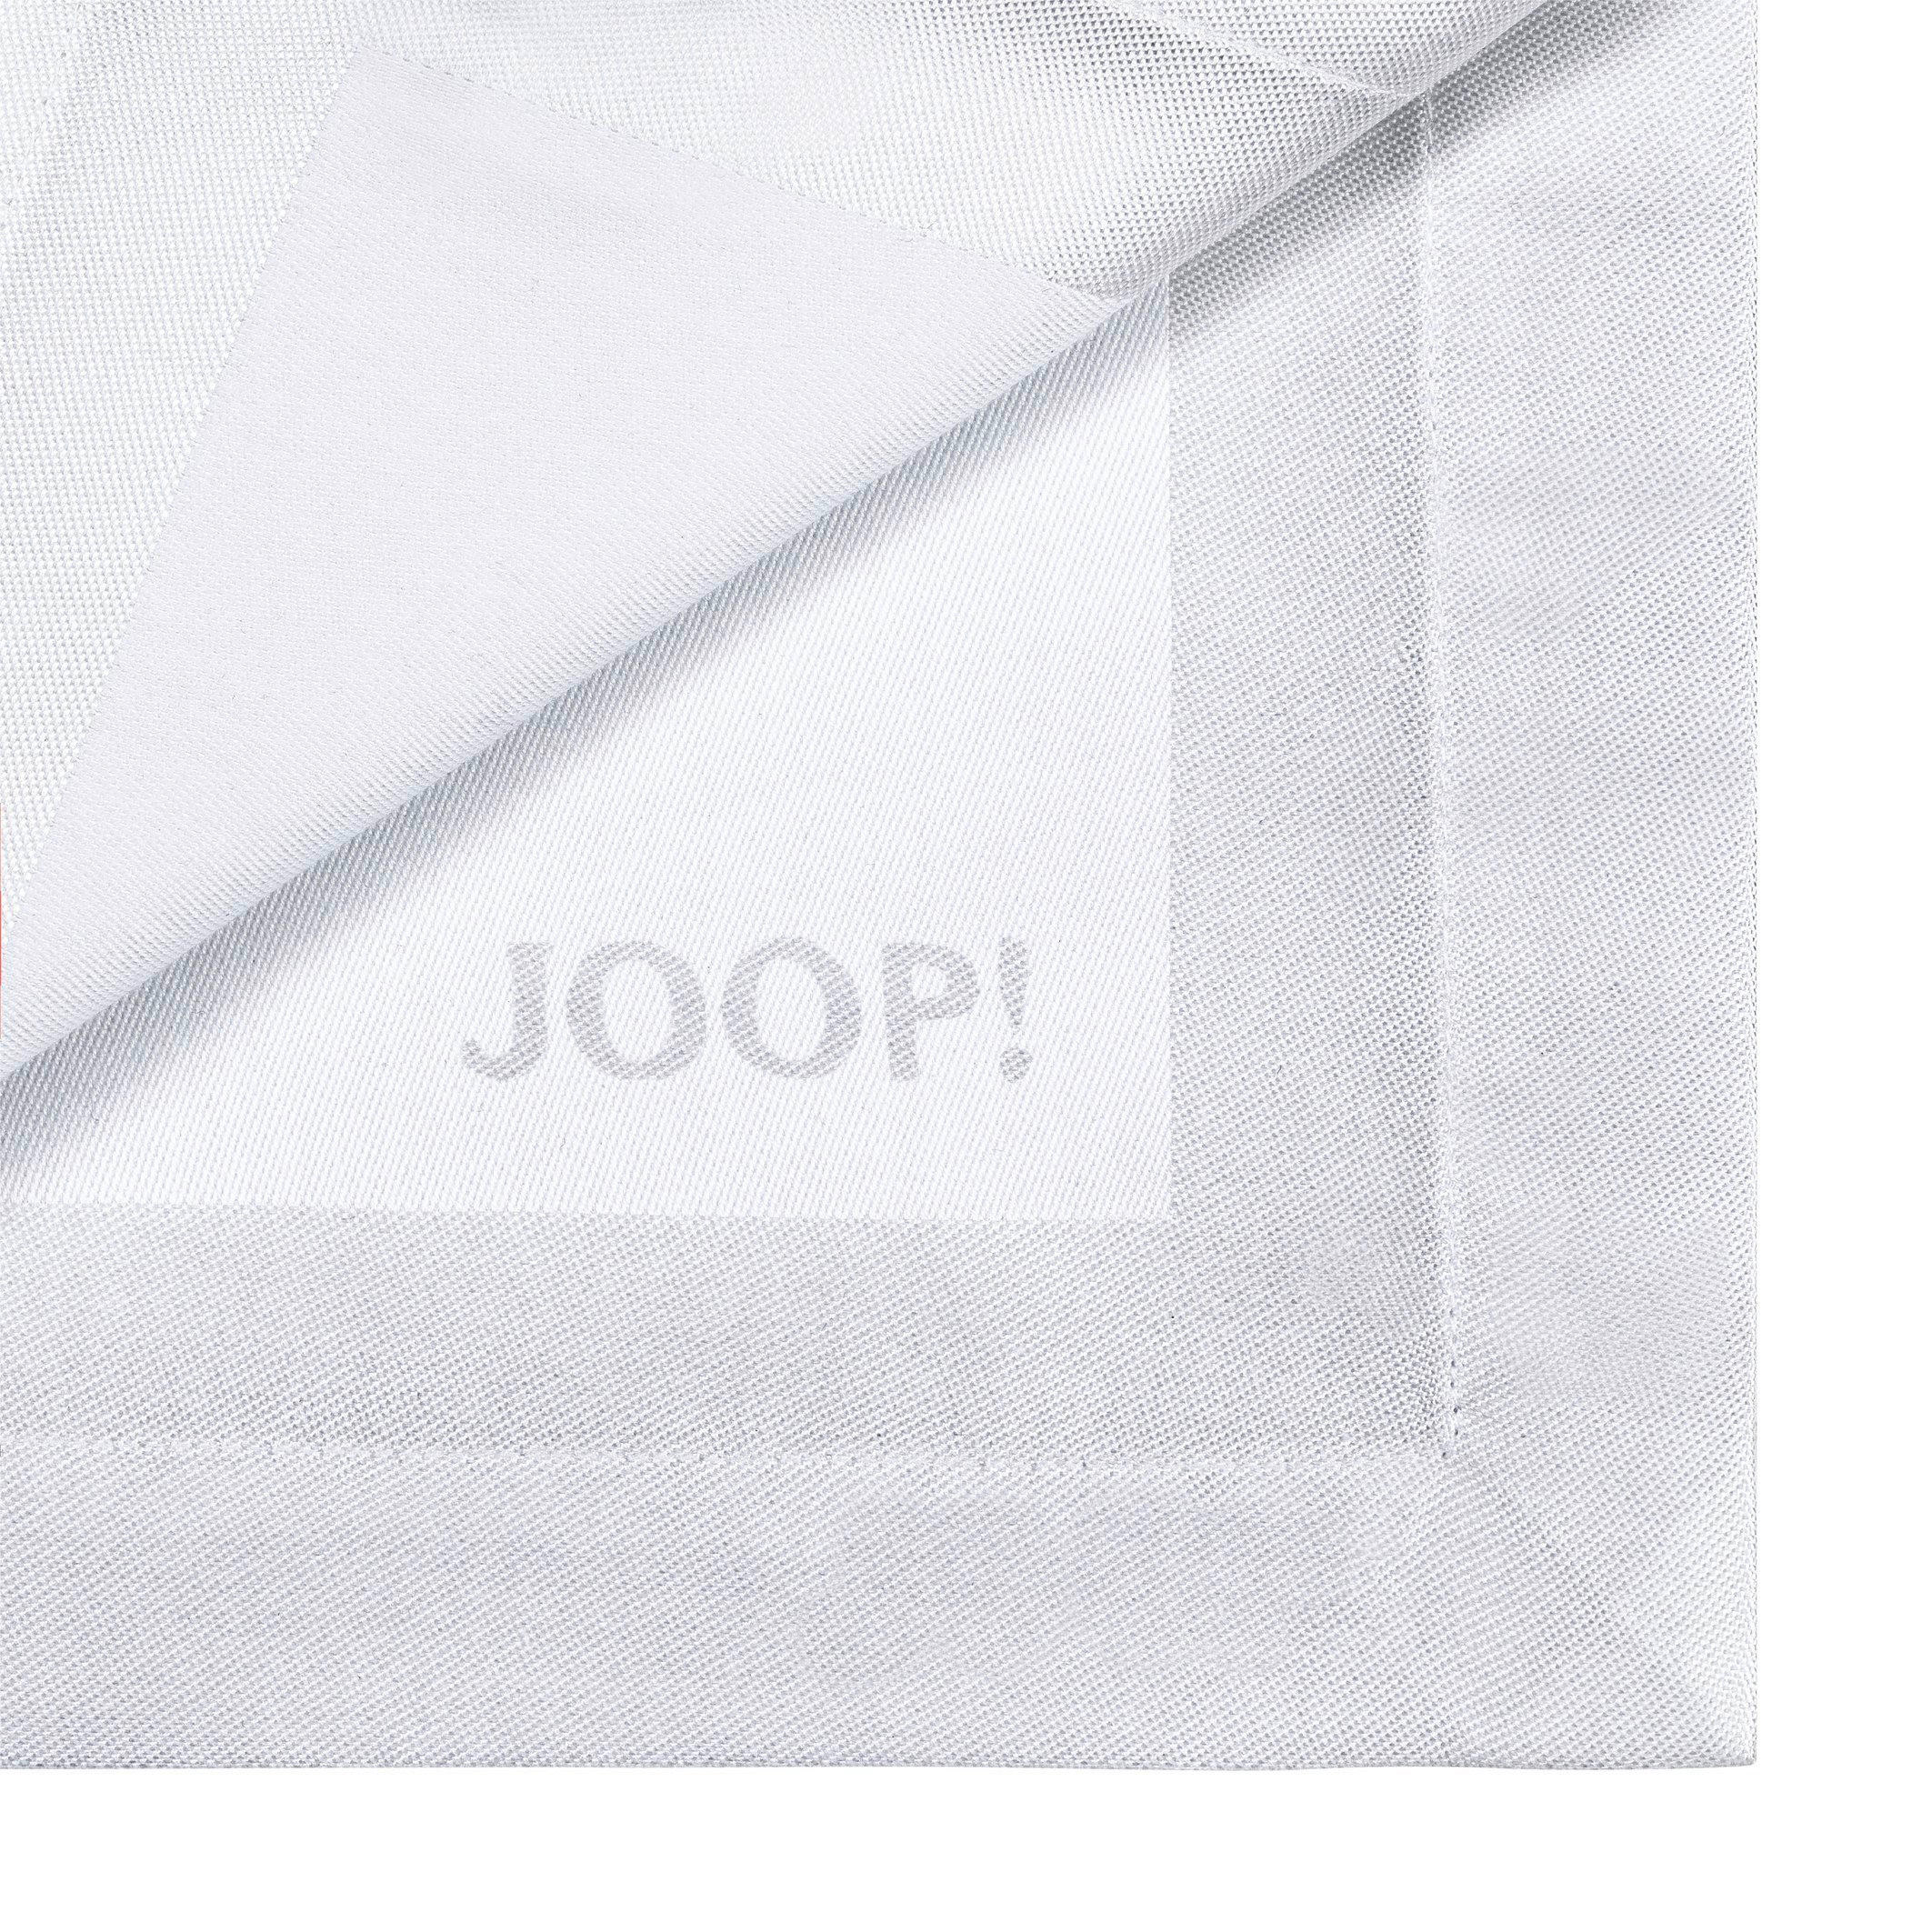 SERVIETTE 2ER-SET 50/50 cm   - Weiß, Design, Textil (50/50cm) - Joop!